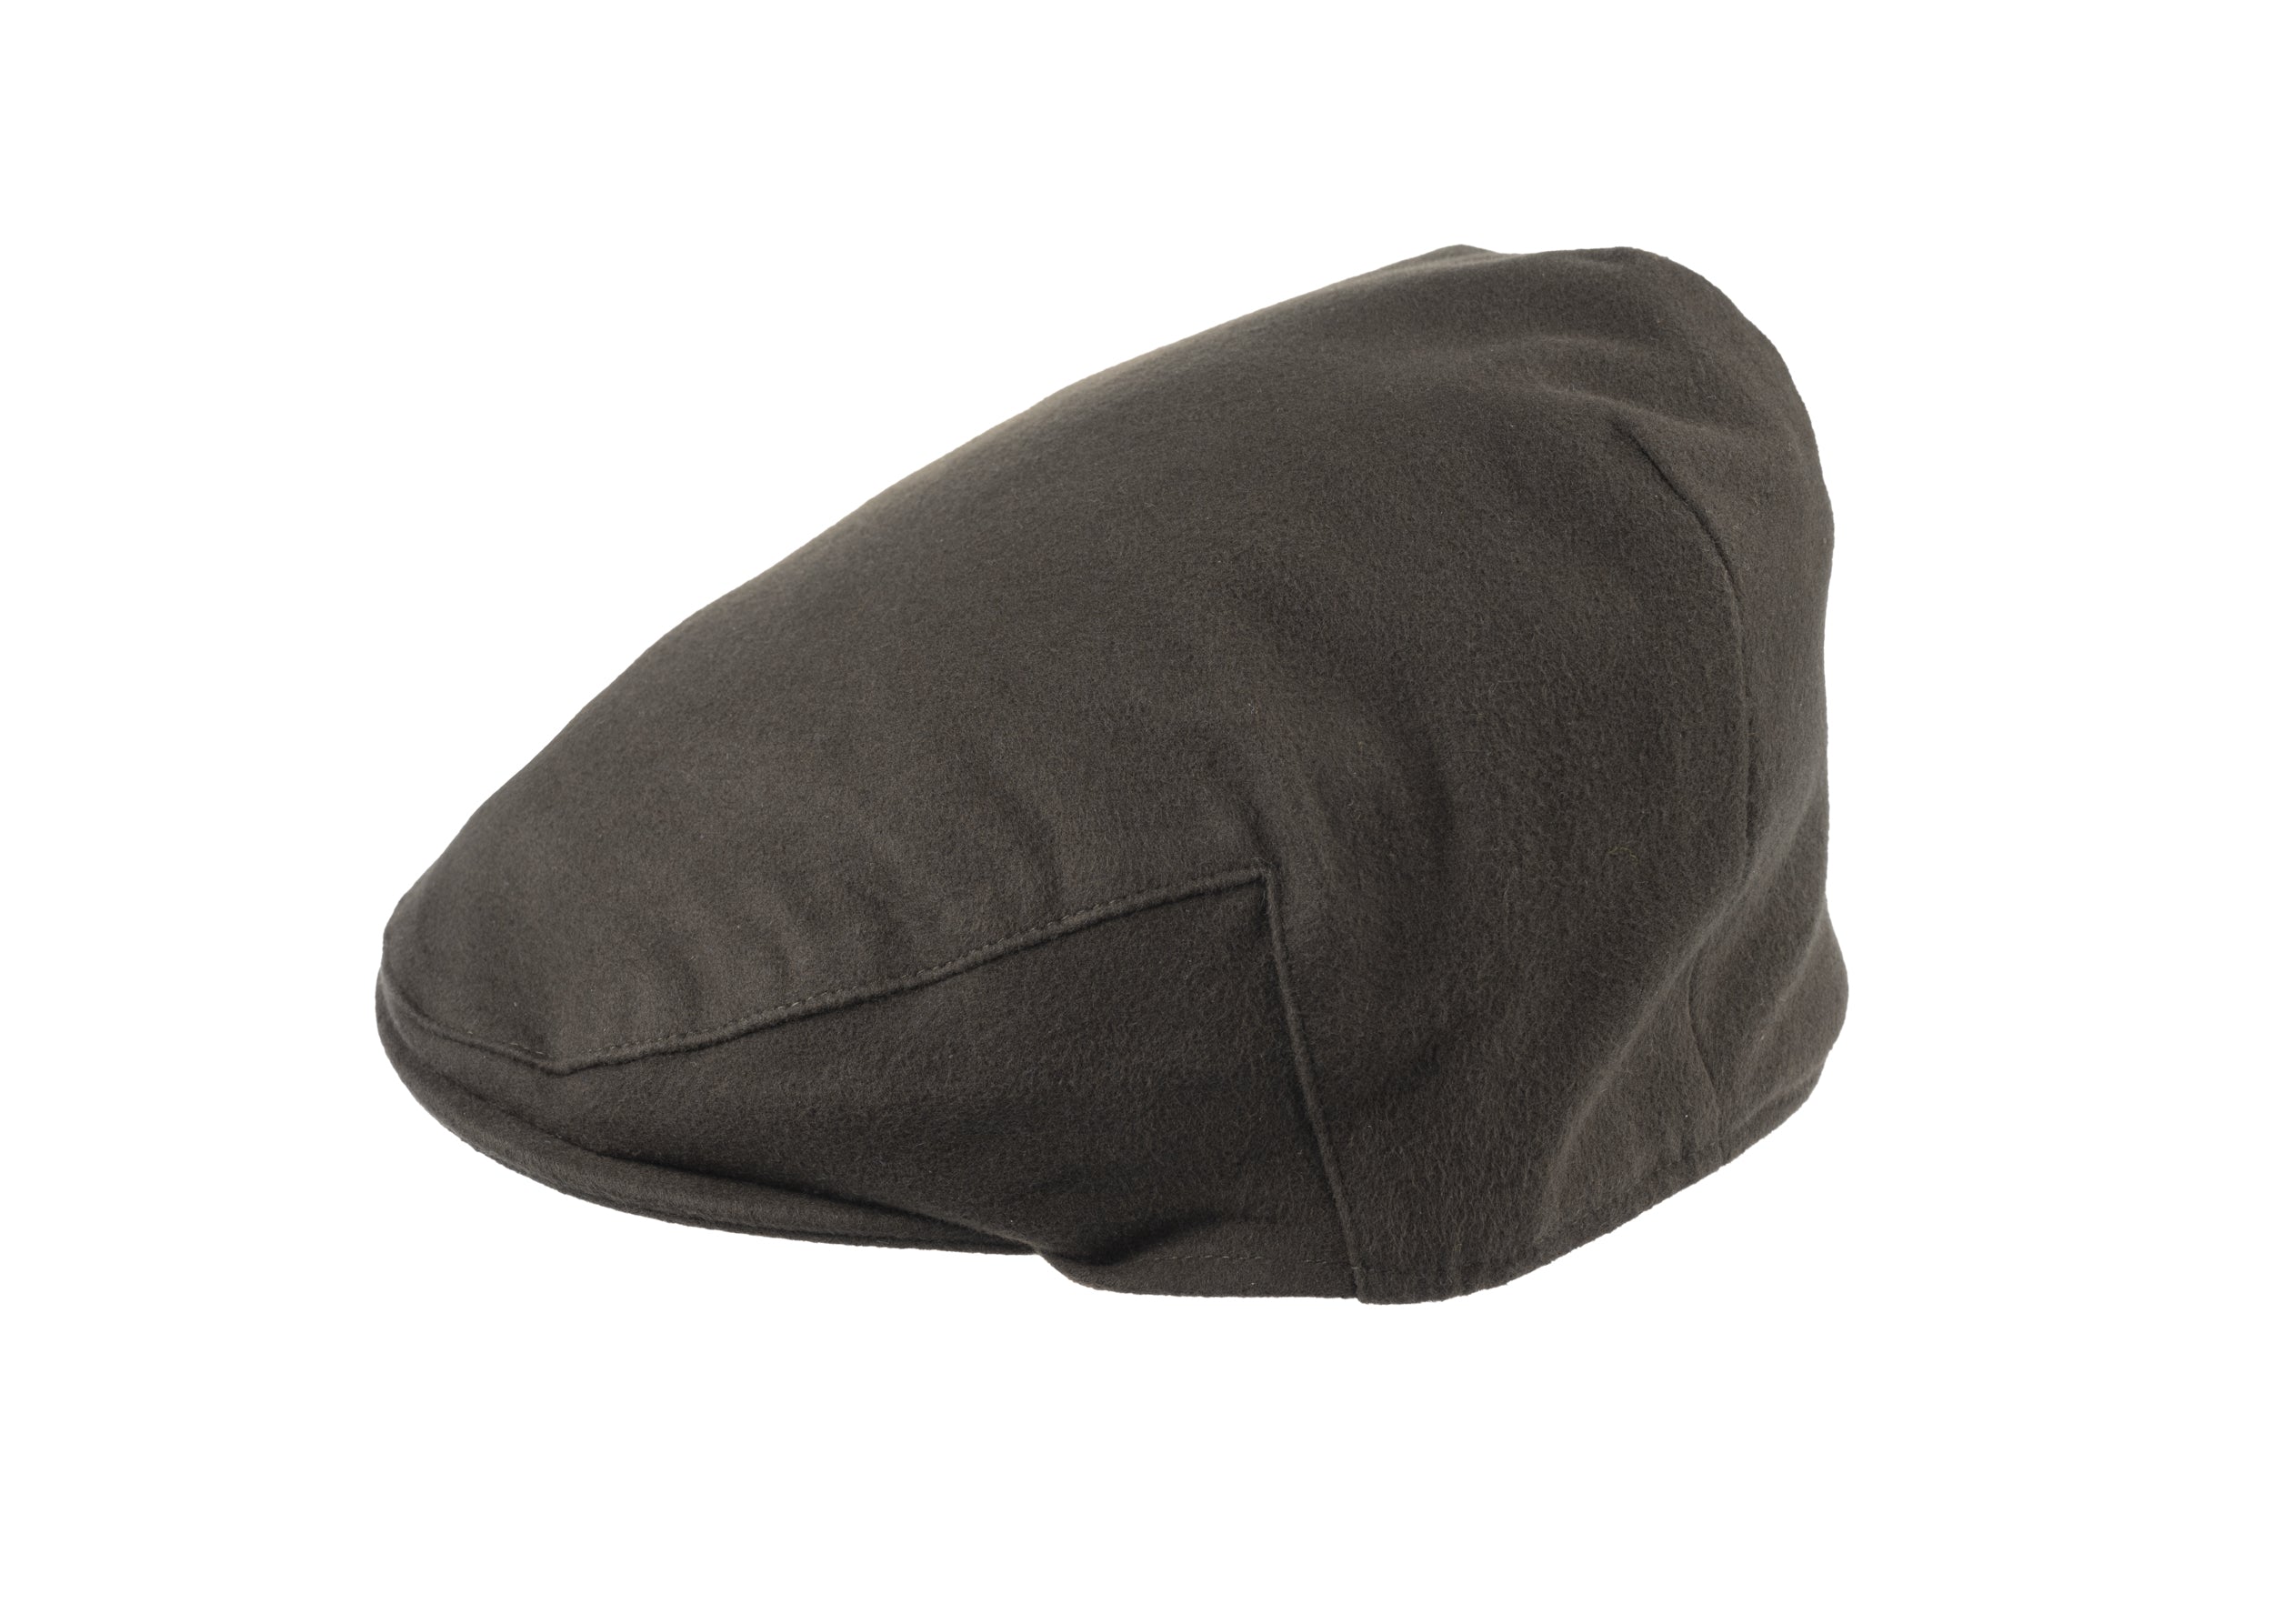 Balmoral moleskin cotton cap in Brown